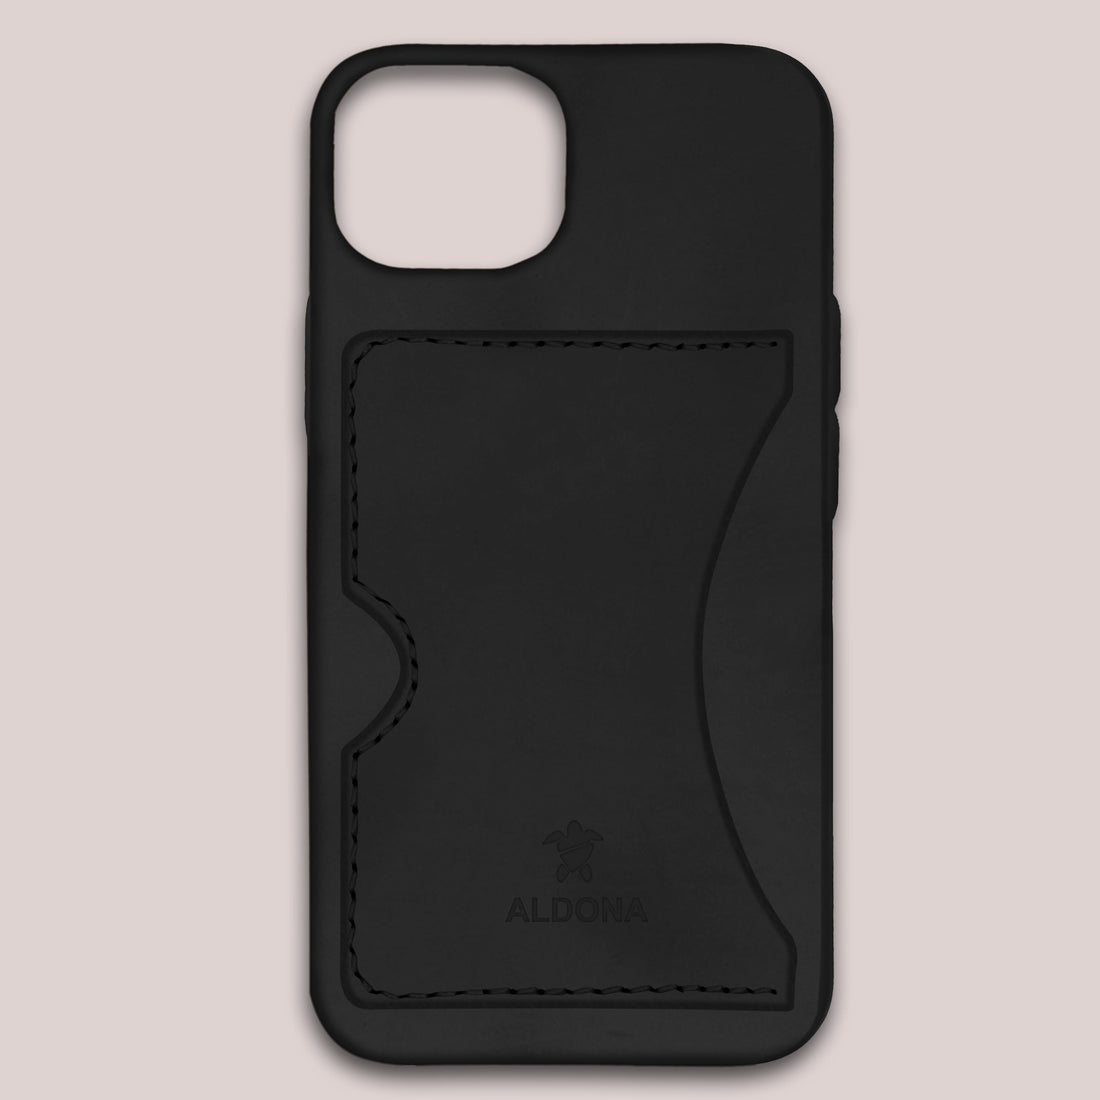 Baxter Card Case for iPhone 12 - Cognac